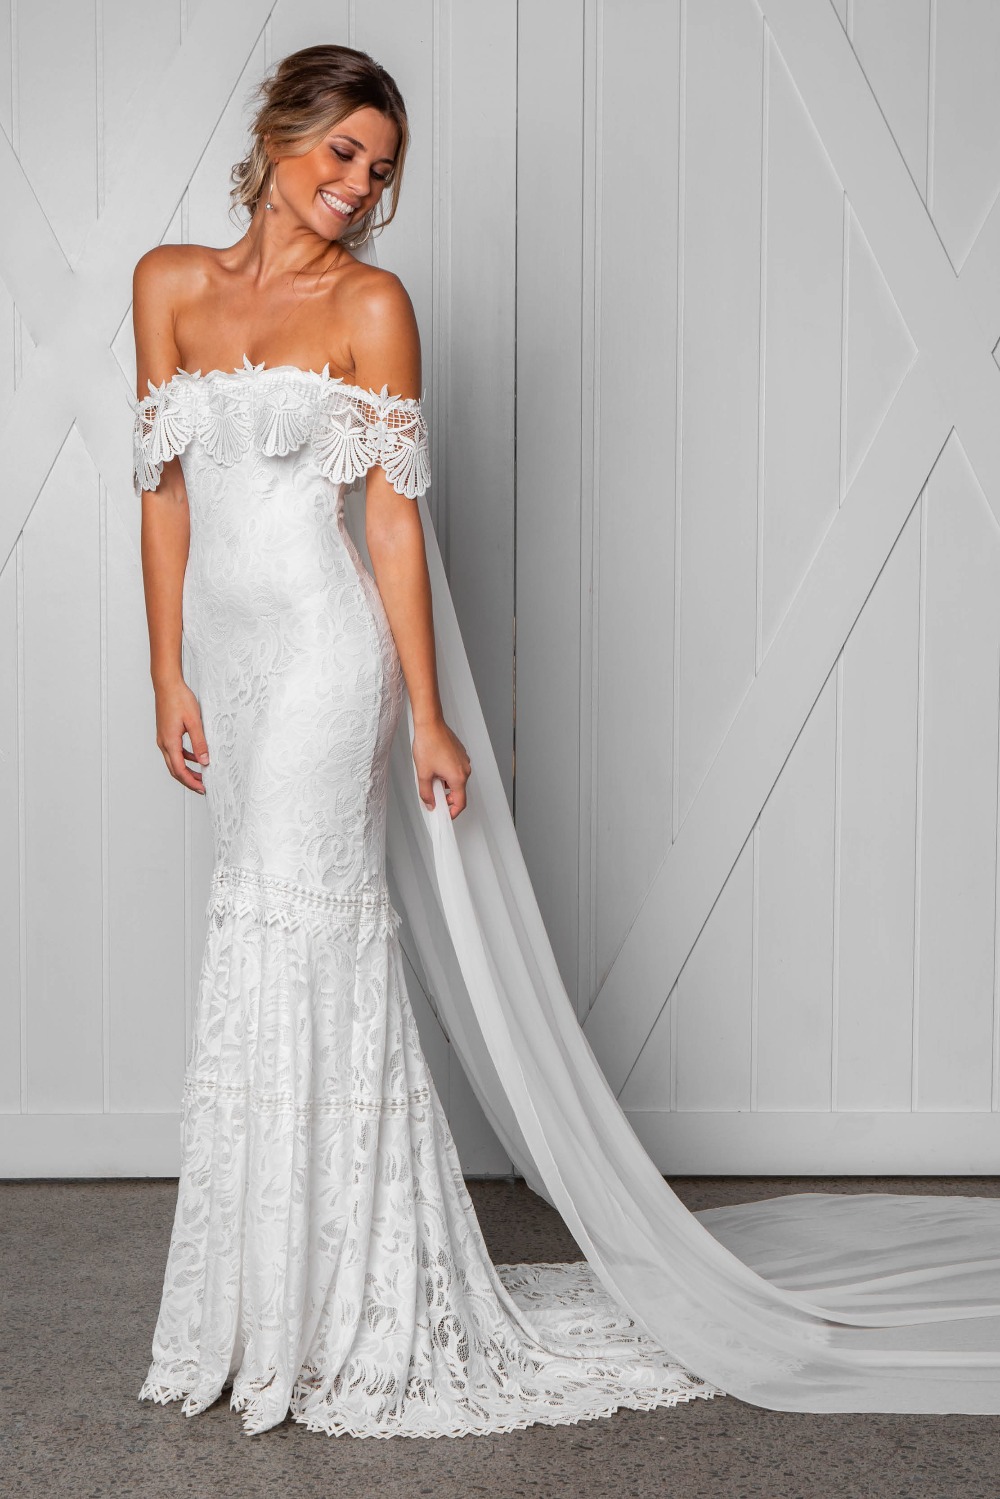 cien-wedding-dress-by-grace-loves-lace-1600-x-1067